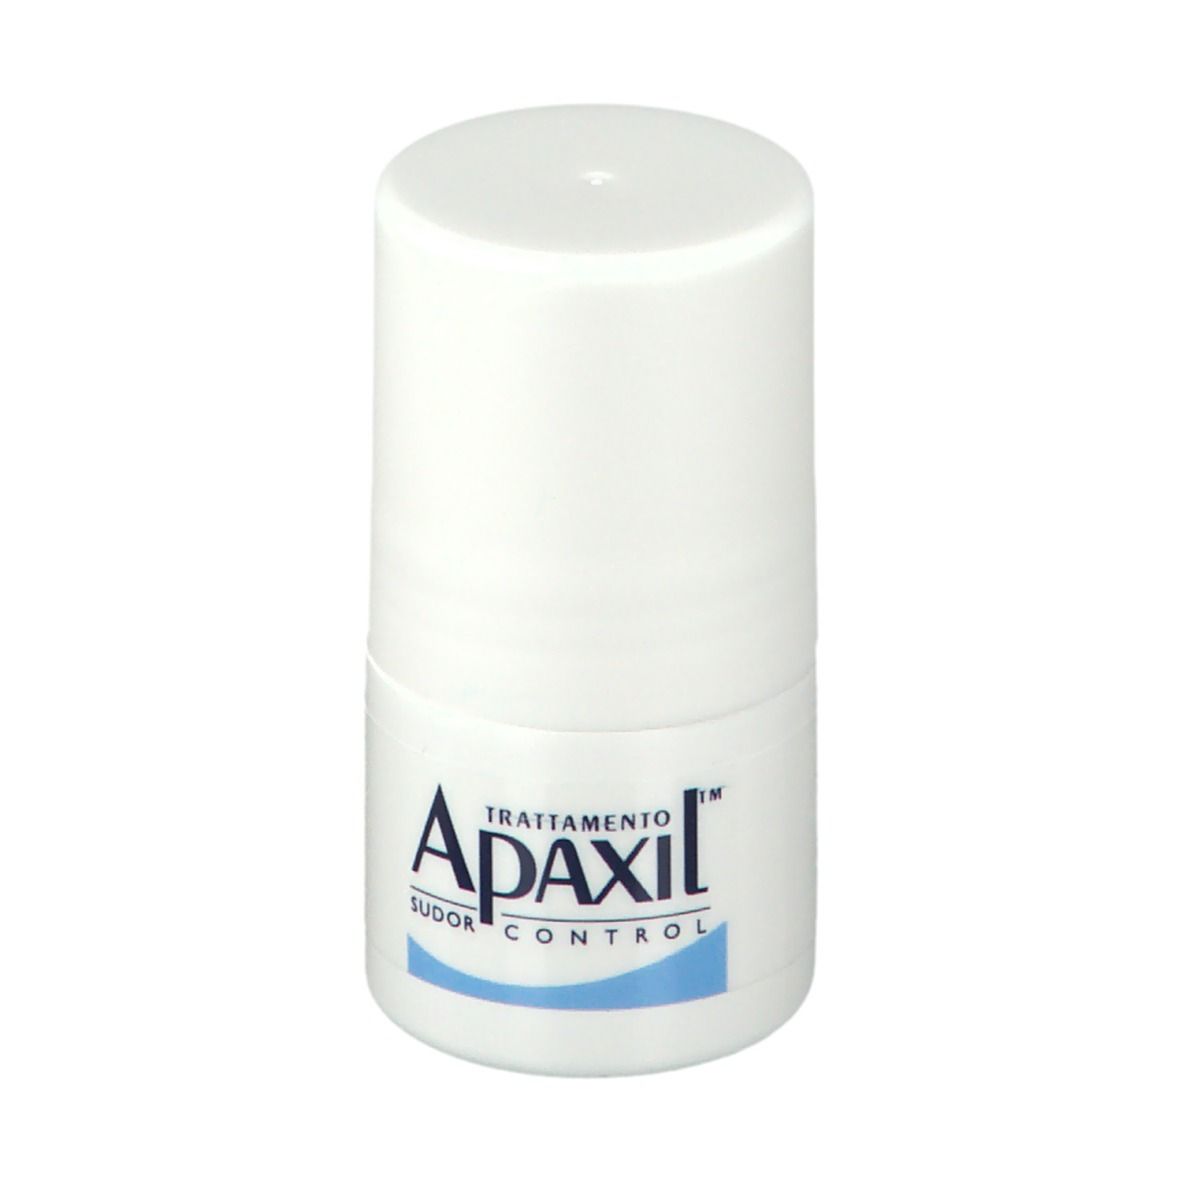 Image of Apaxil® Sudor Control